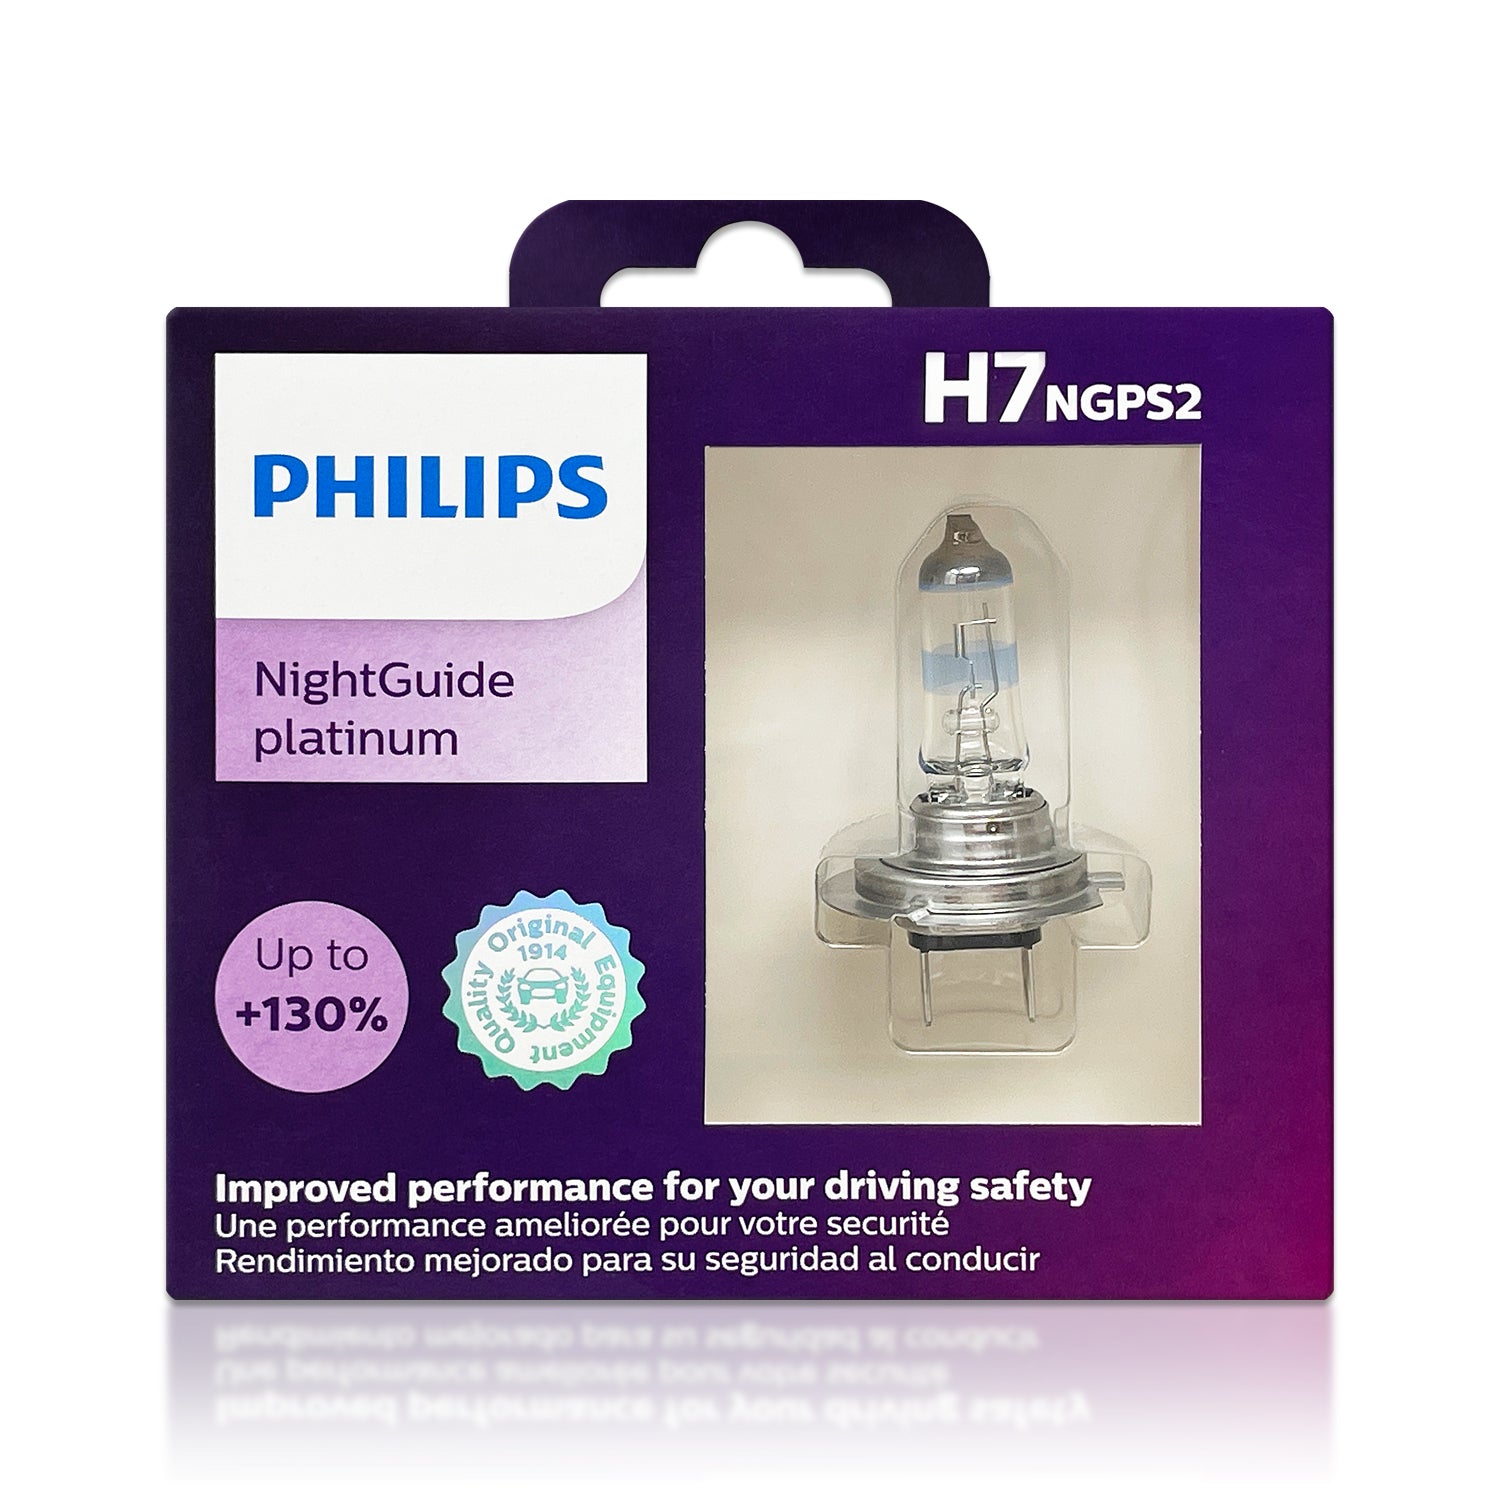 Philips H7 CrystalVision platinum Bulbs